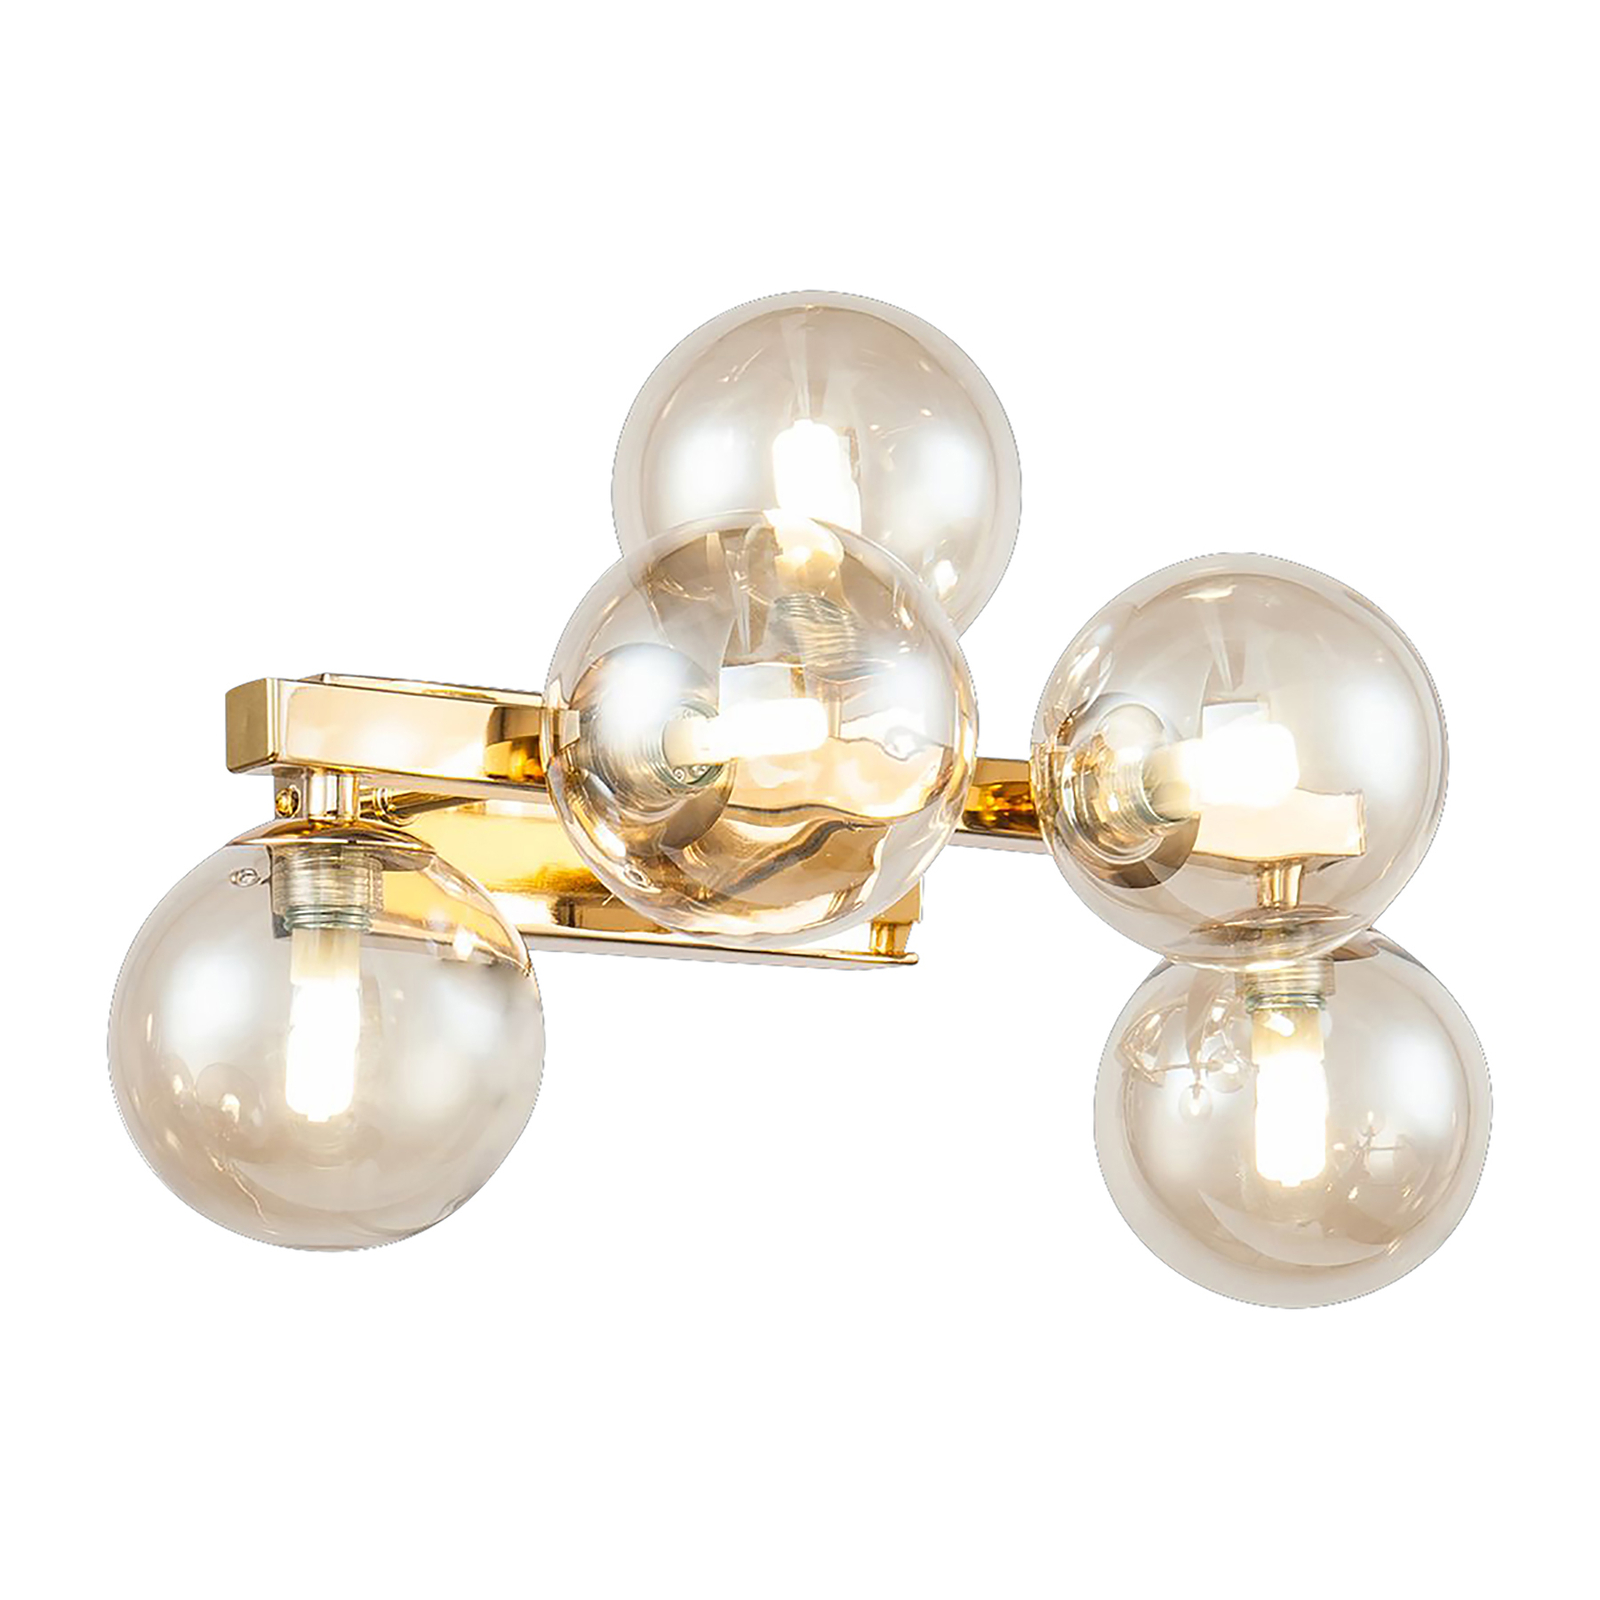 Maytoni Dallas aplique con 5 esferas de vidrio oro